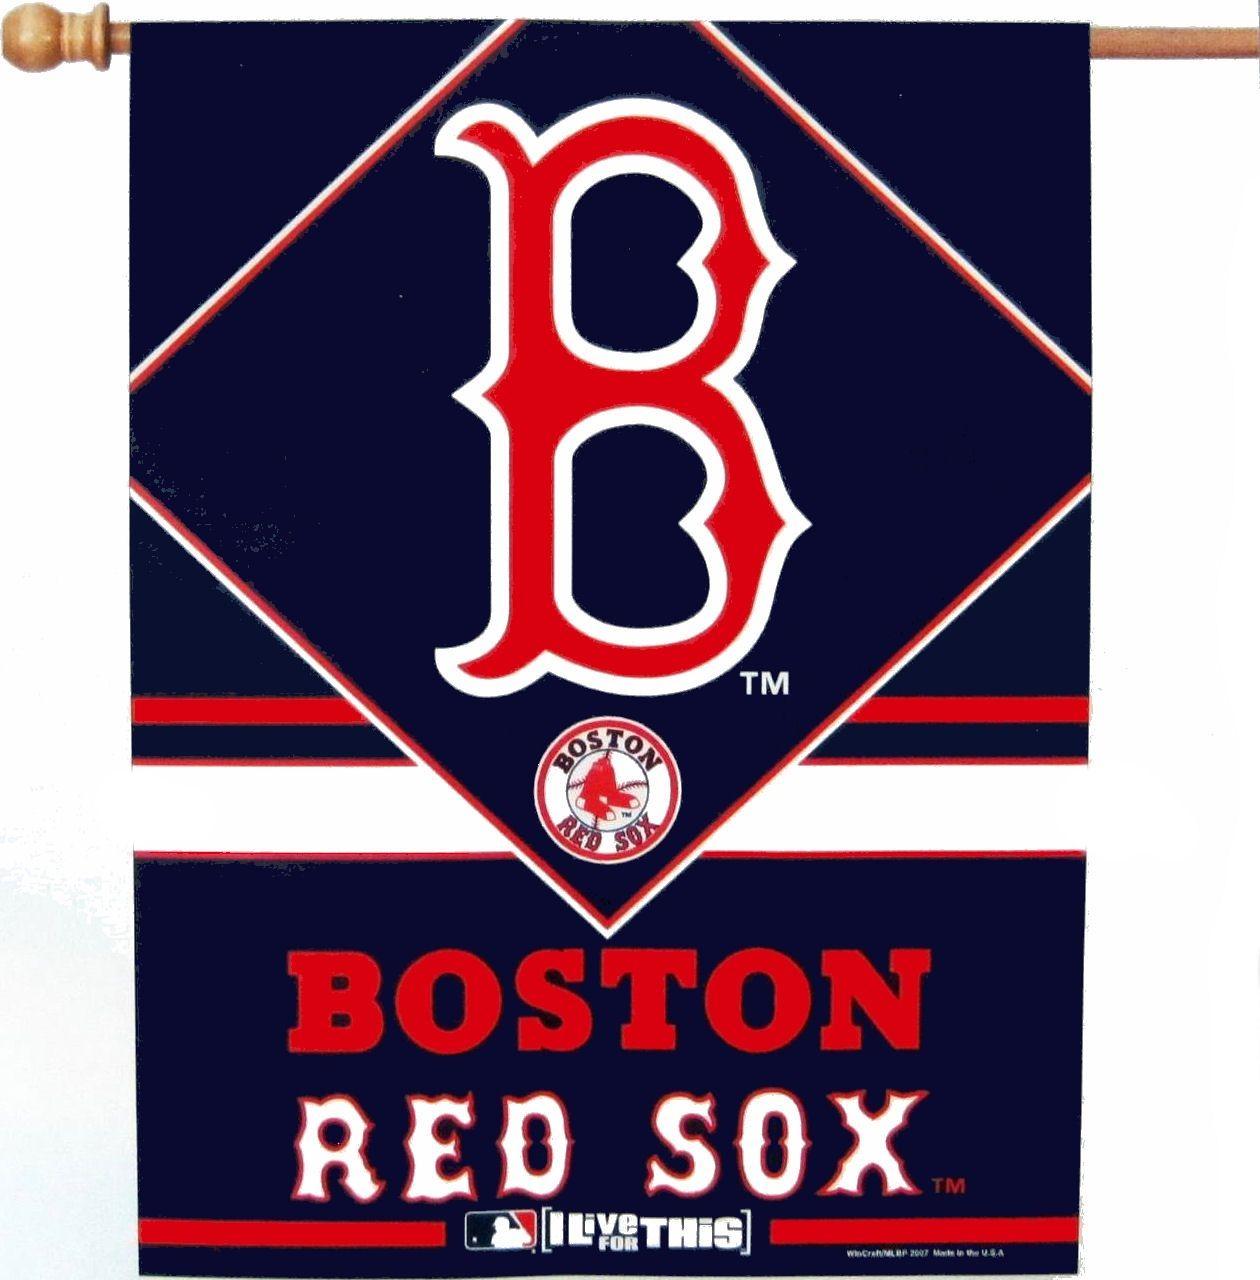 USA Banner Red White Blue Logo - Boston Red Sox Logos and Name Diamond Vertical Banner Flag 27x37